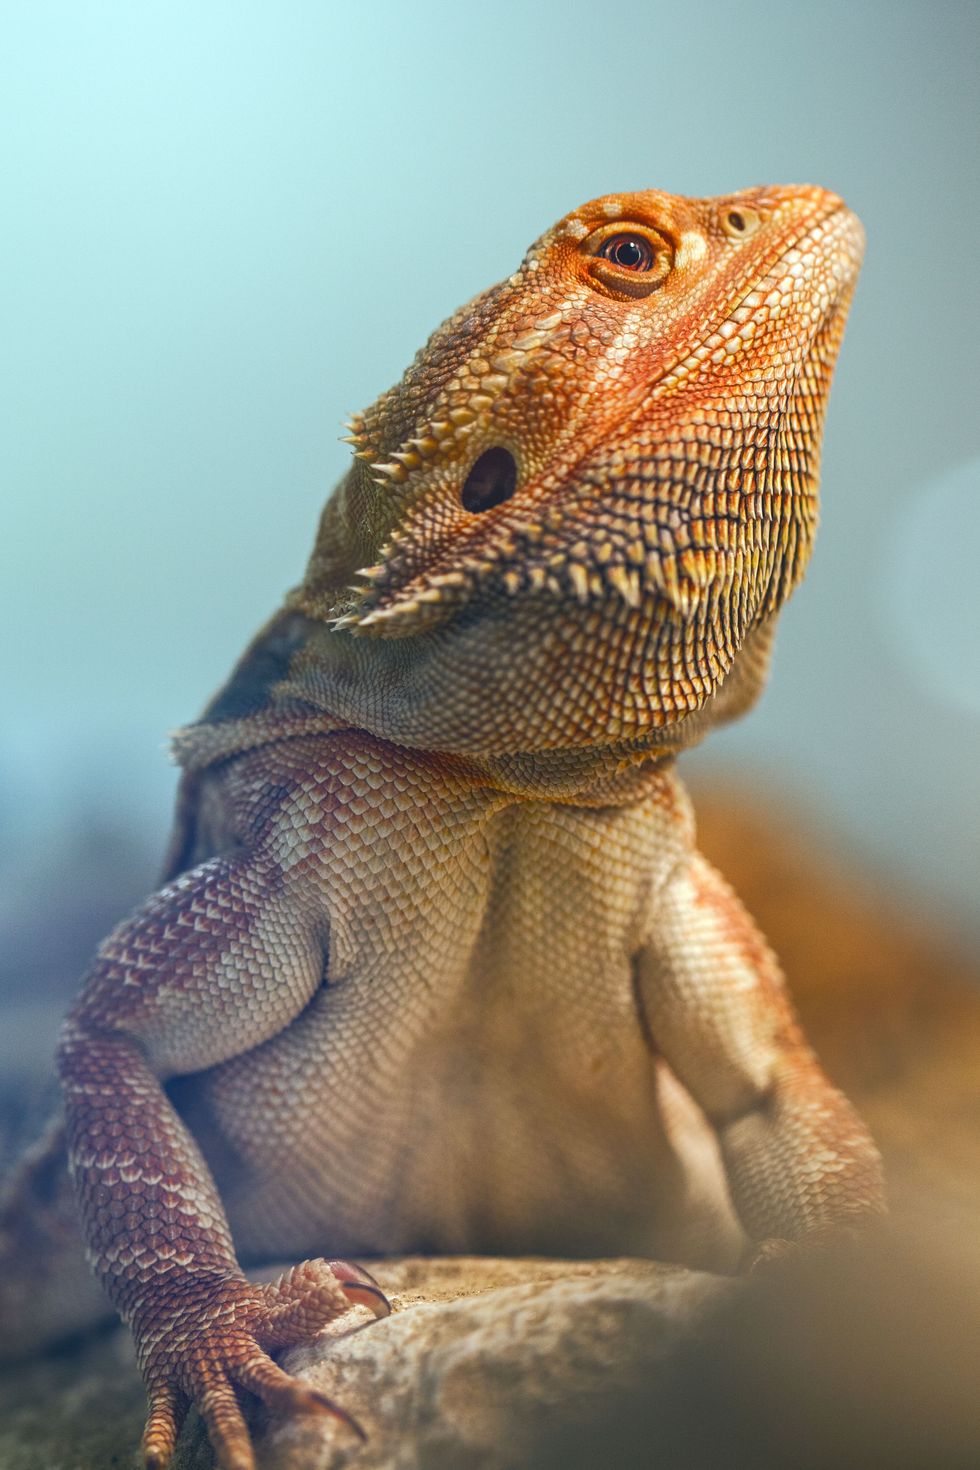 Are Bearded Dragons Good Pets? - SB Magazine